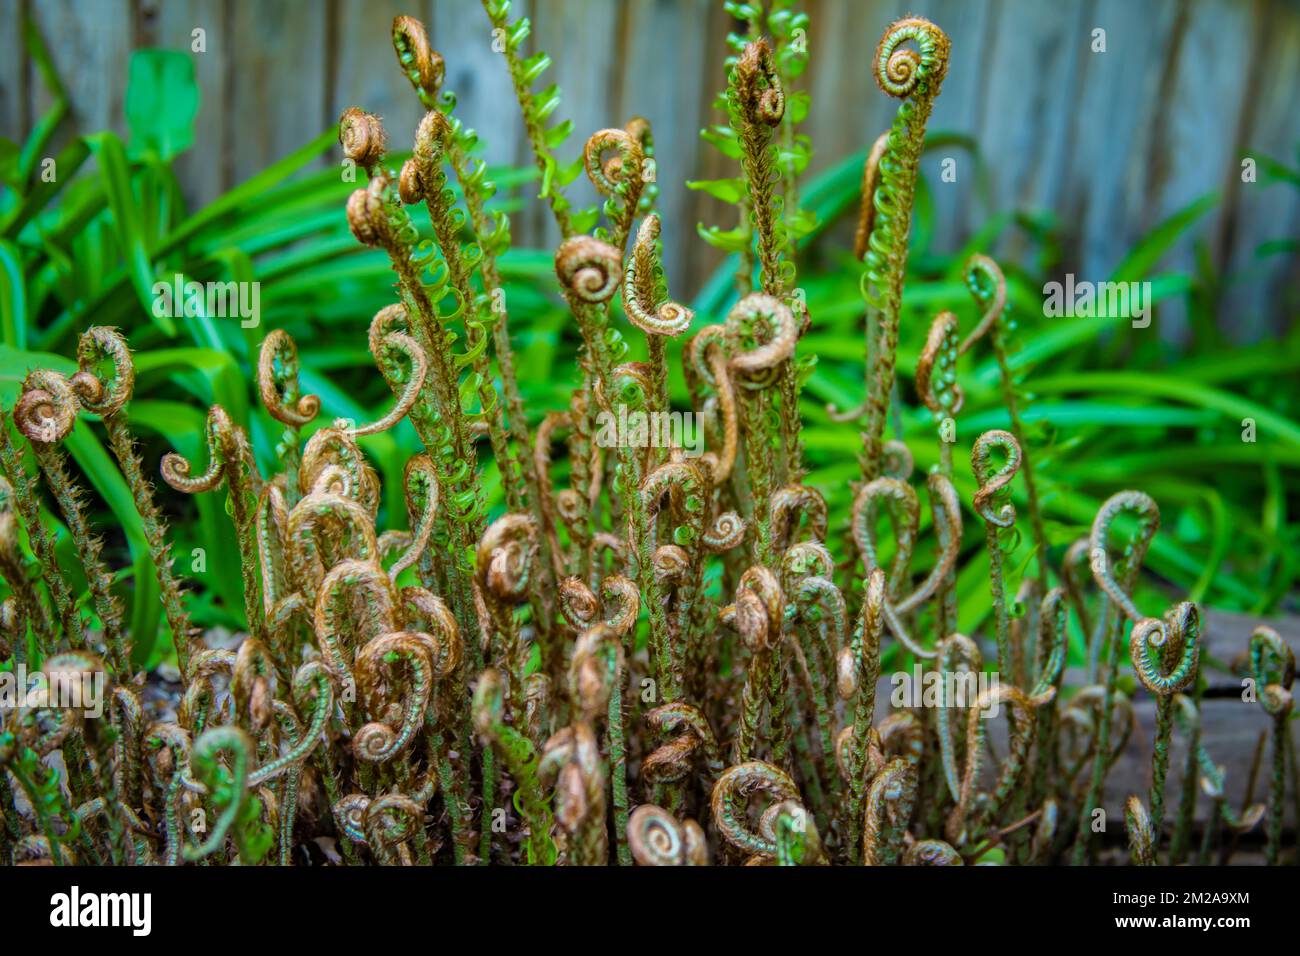 Western swordfern growing in Fibonaaci spirals at Orr hotsprings Stock Photo